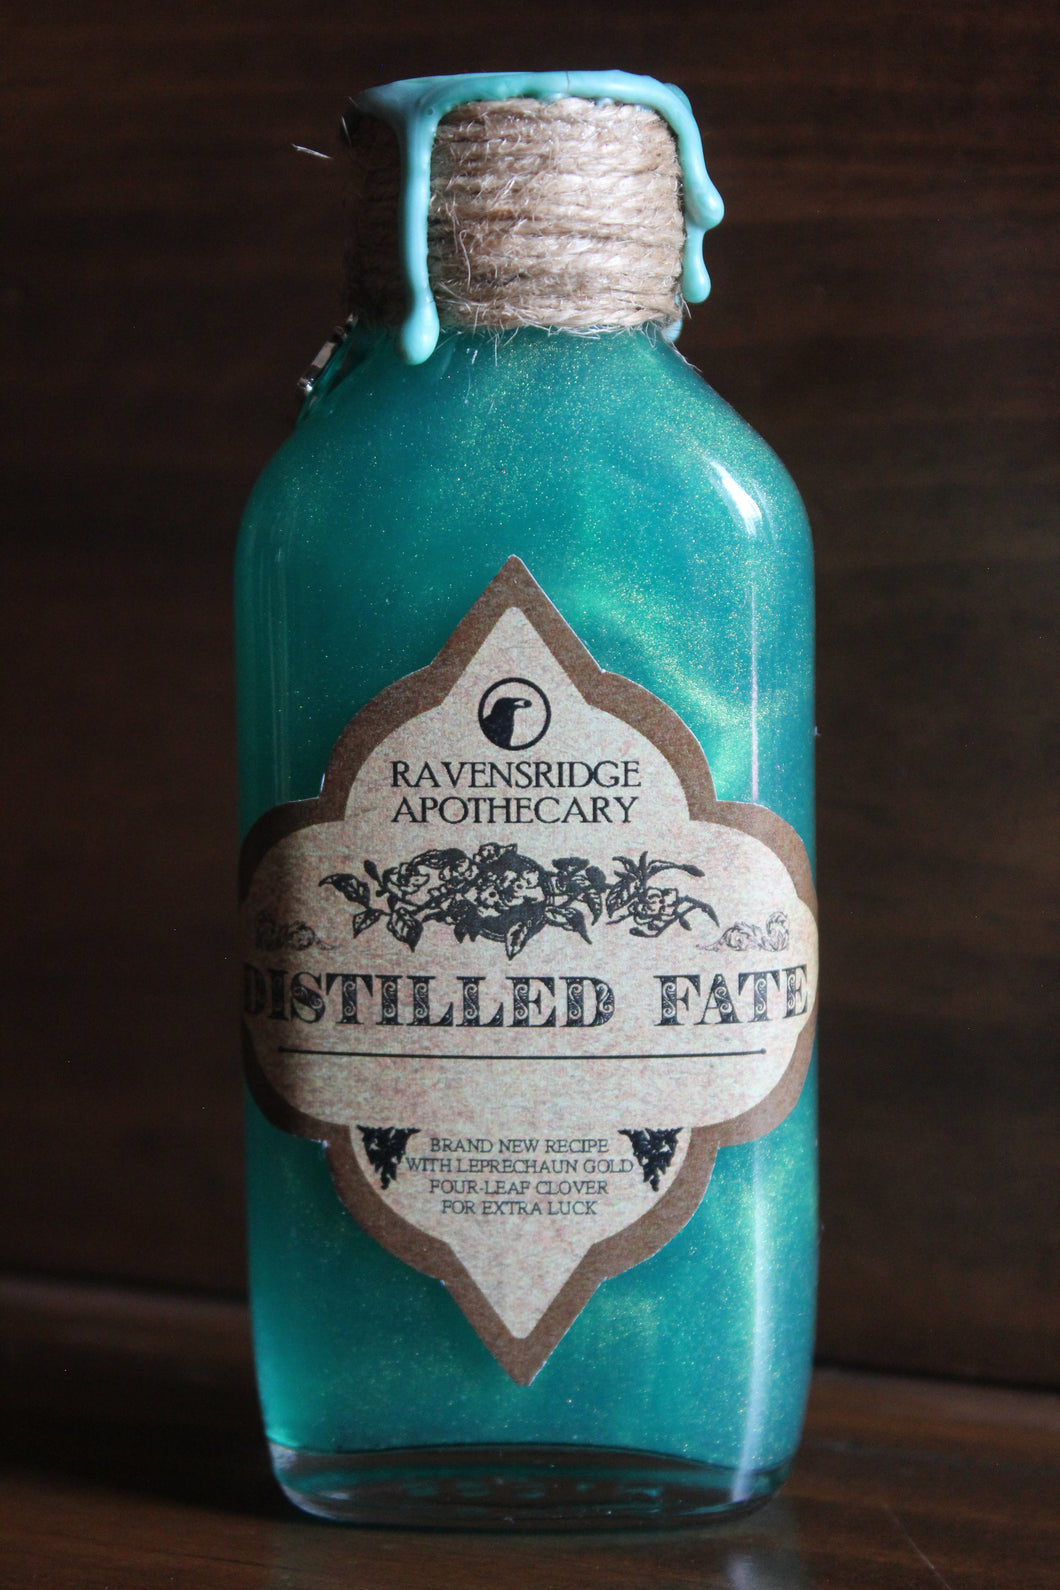 Distilled Fate - Small Magic Potion